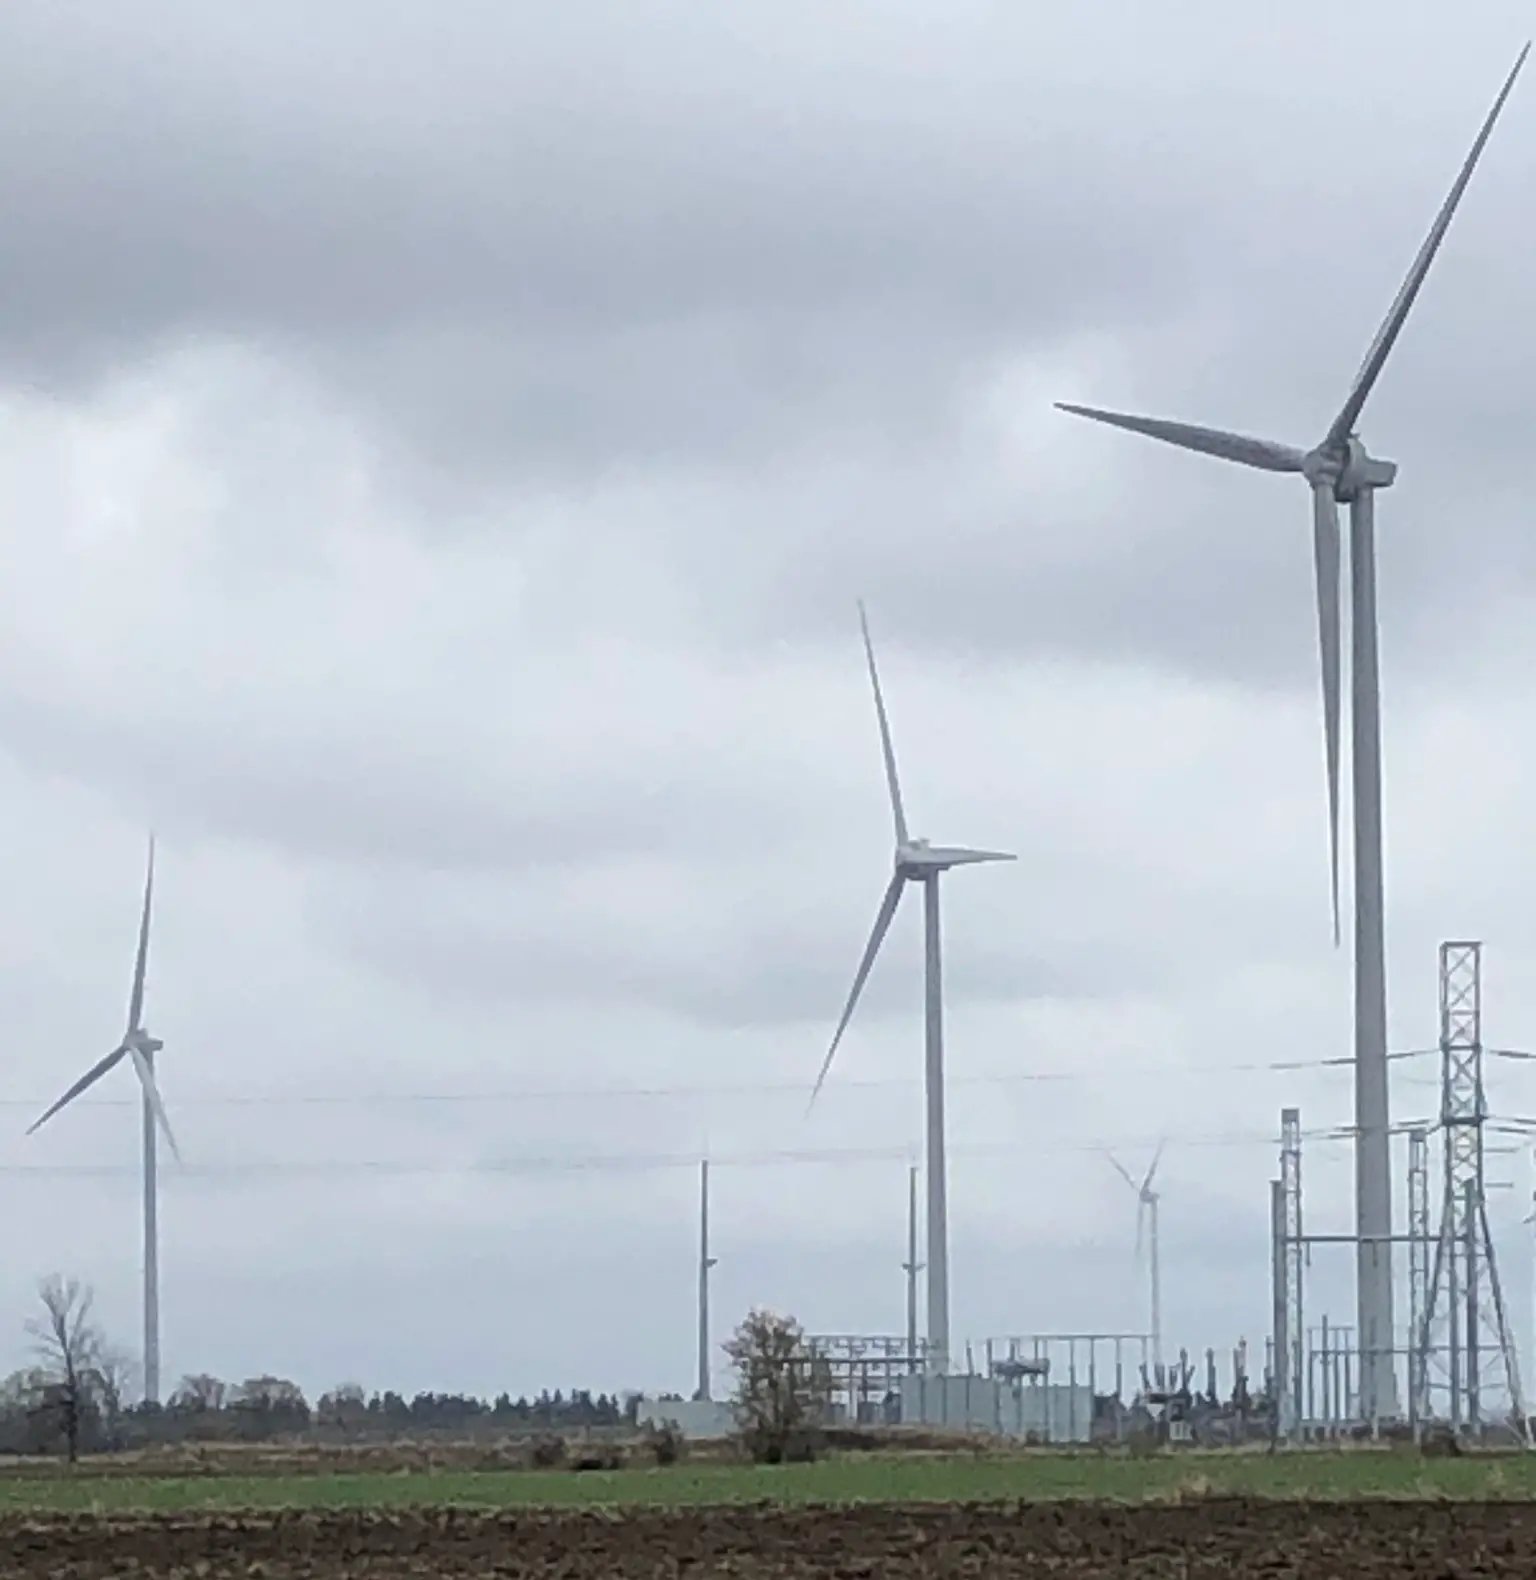 Community Wind Farm Opposition